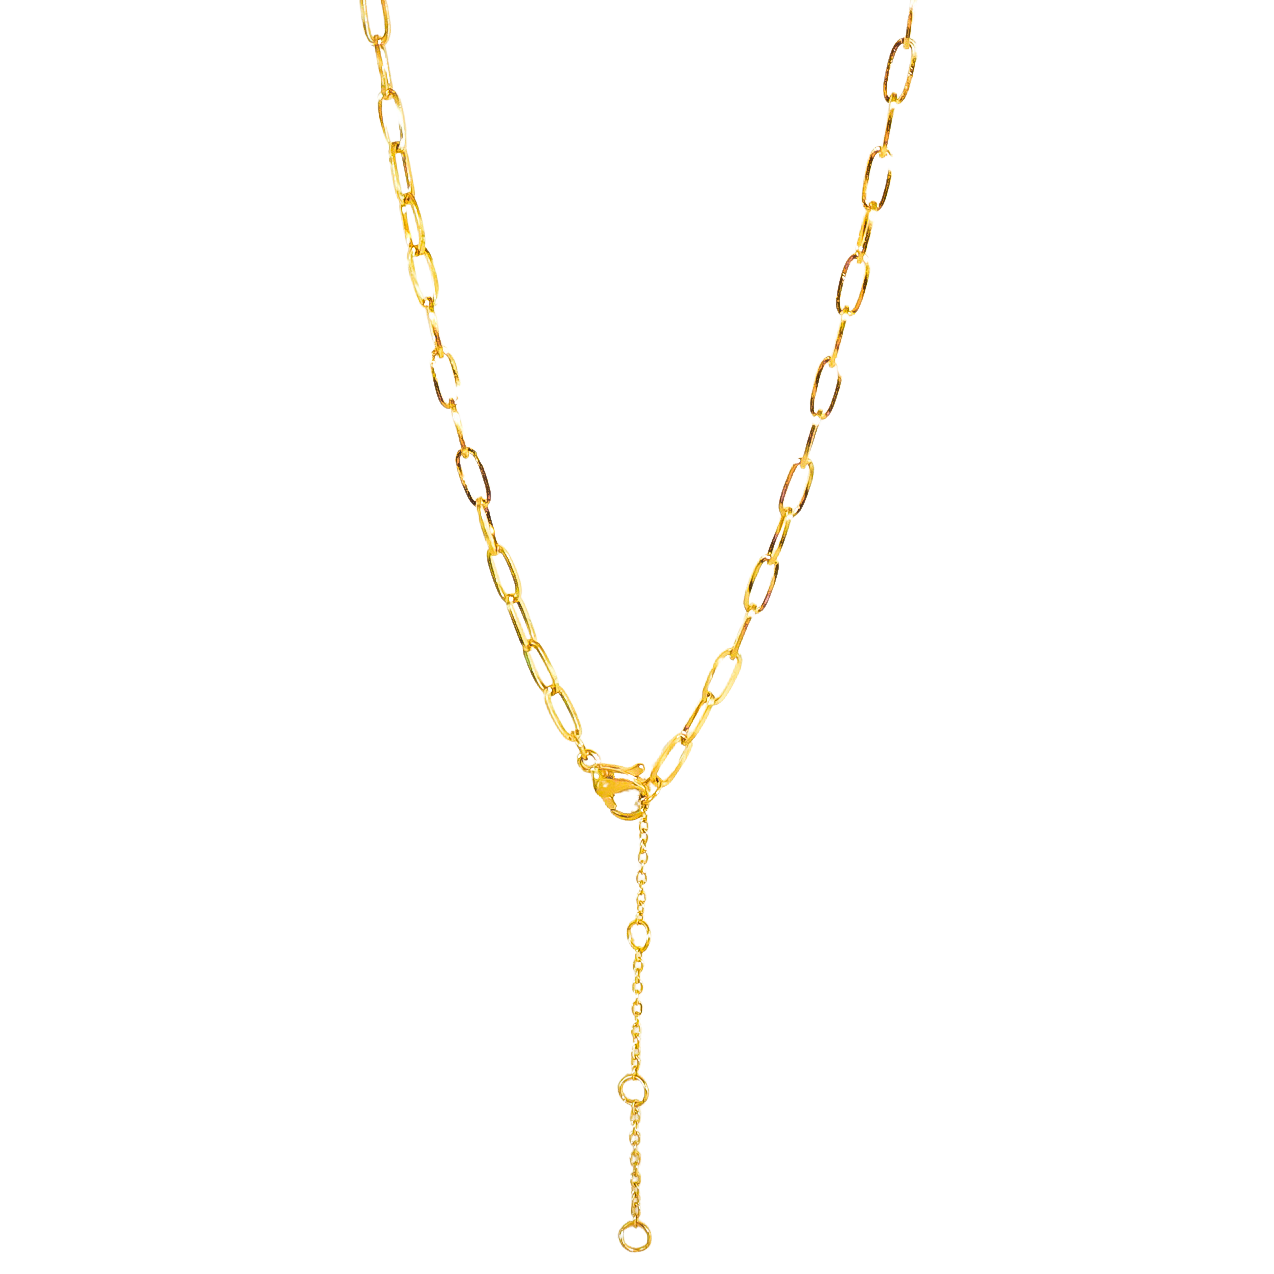 Delicate Gold Staple Chain Necklace